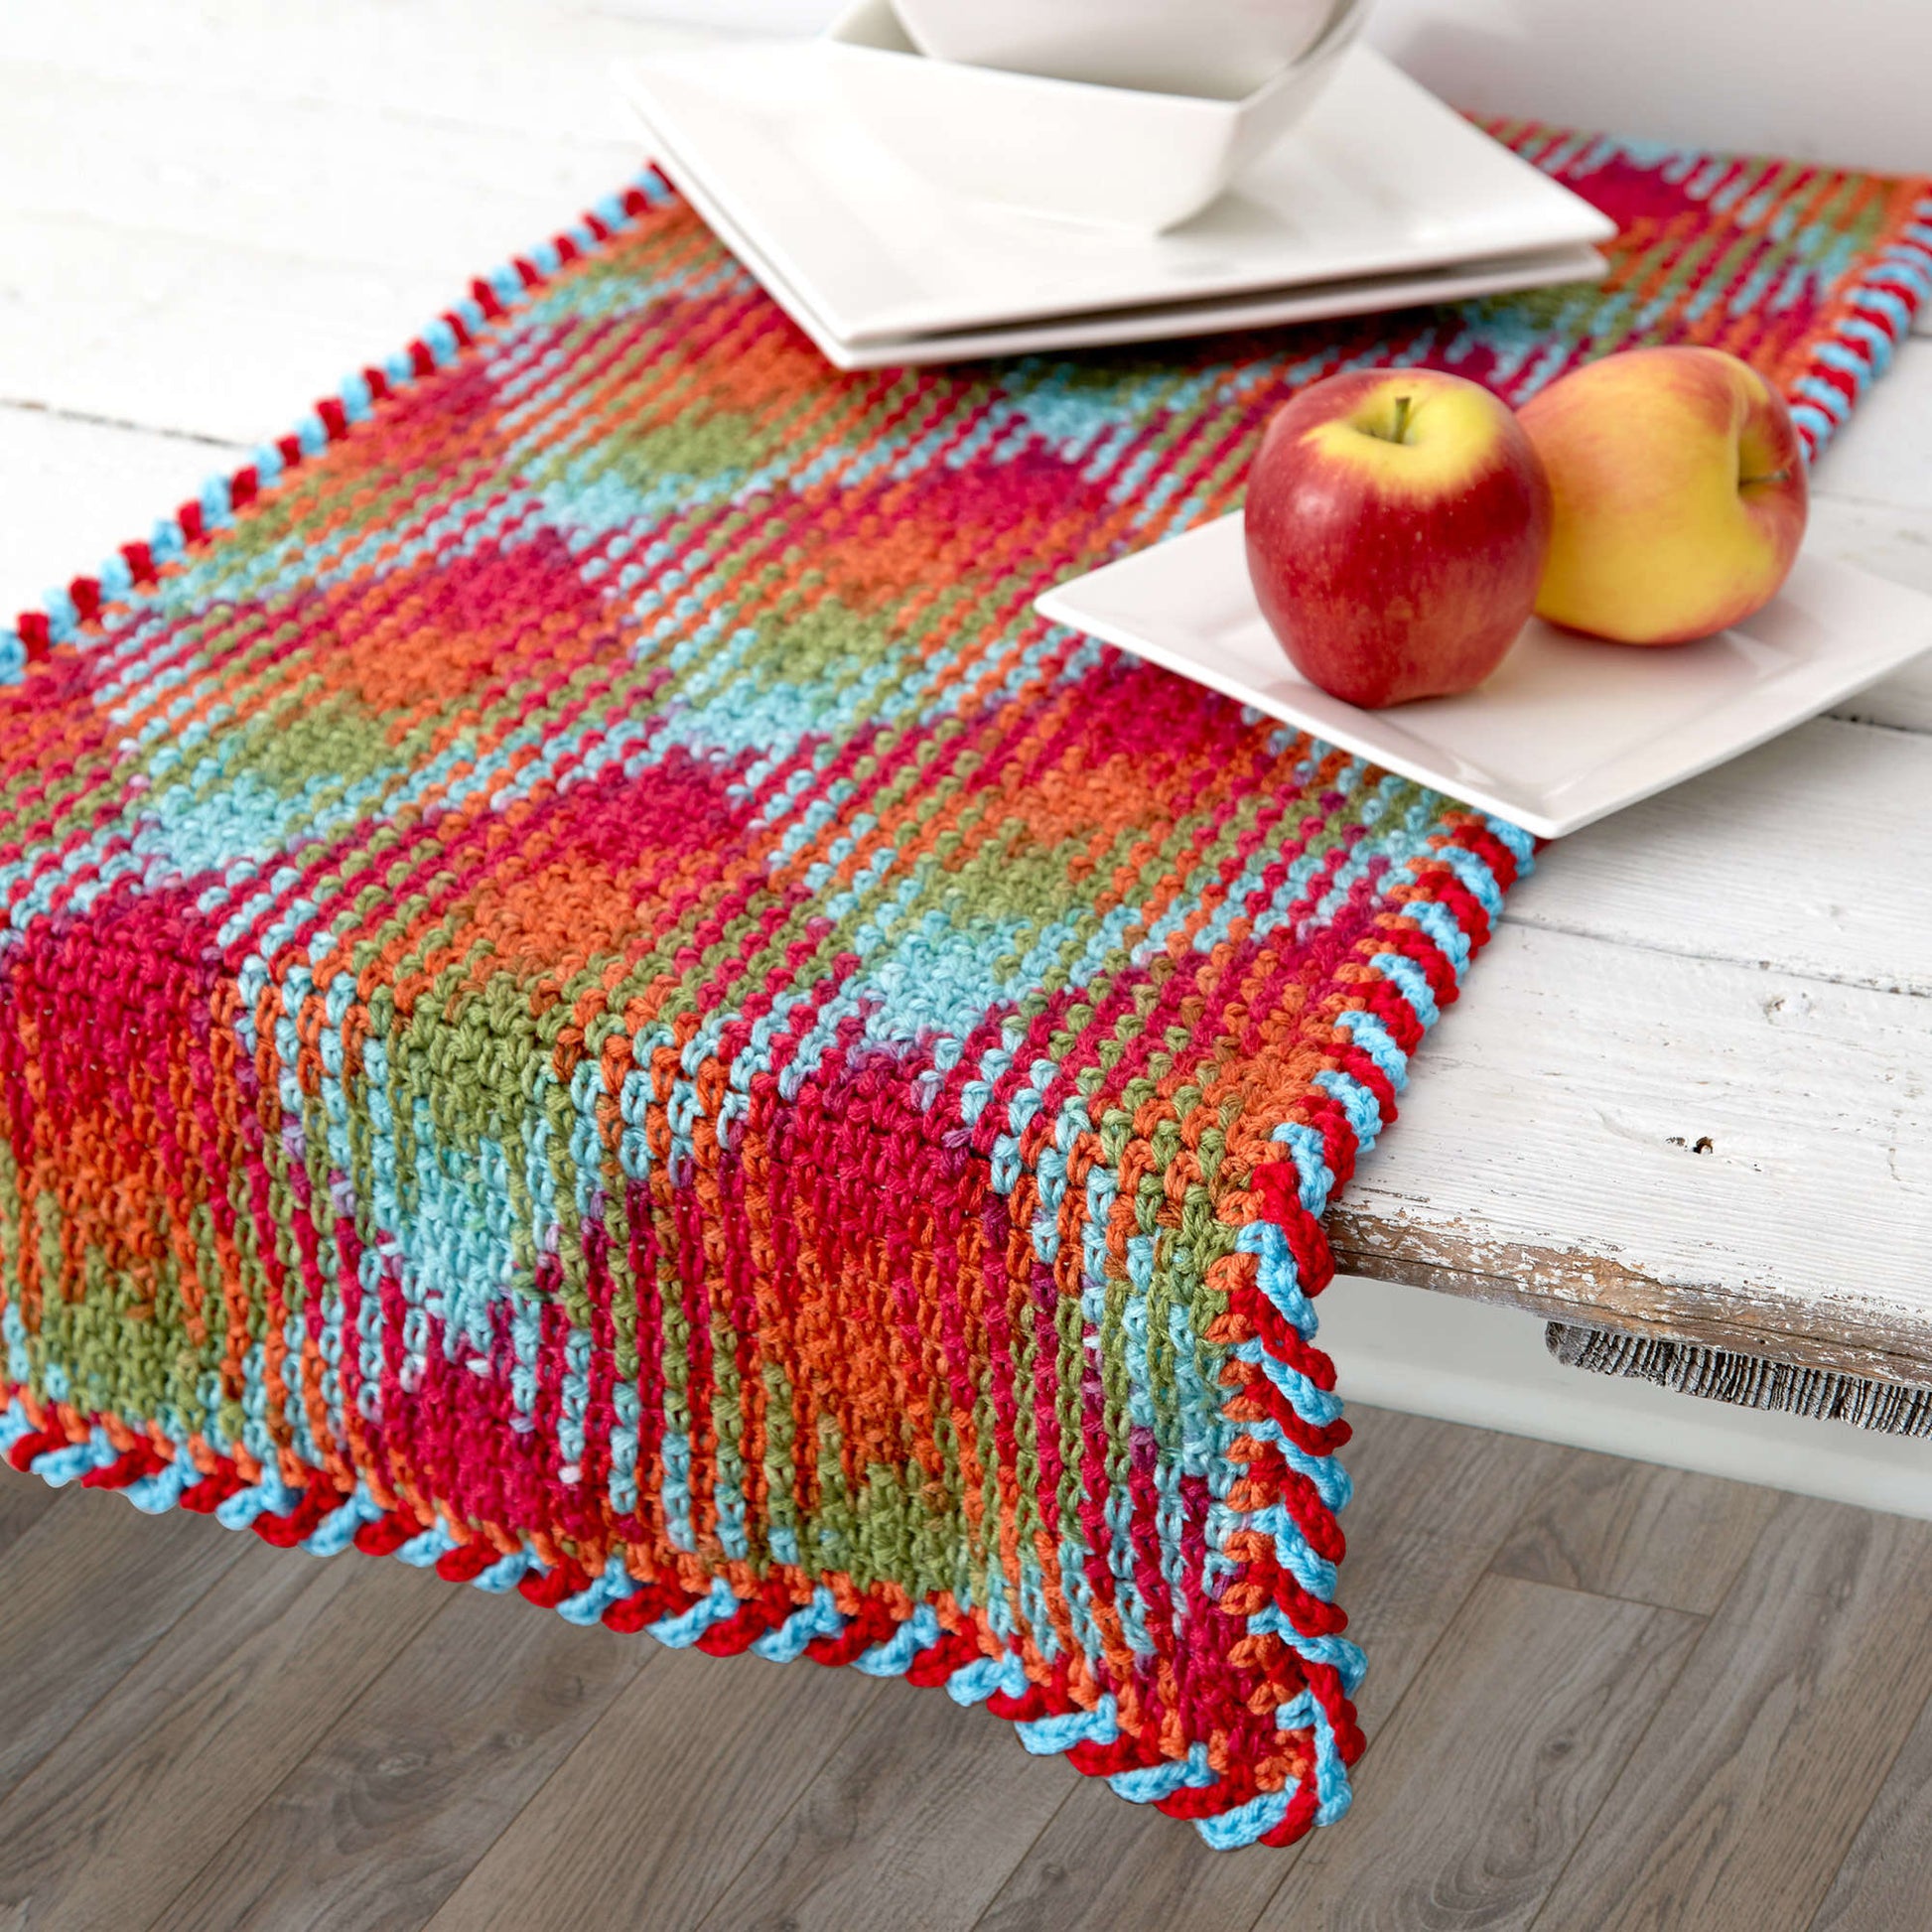 Free Red Heart Crochet Planned Pooling Argyle Table Runner Pattern